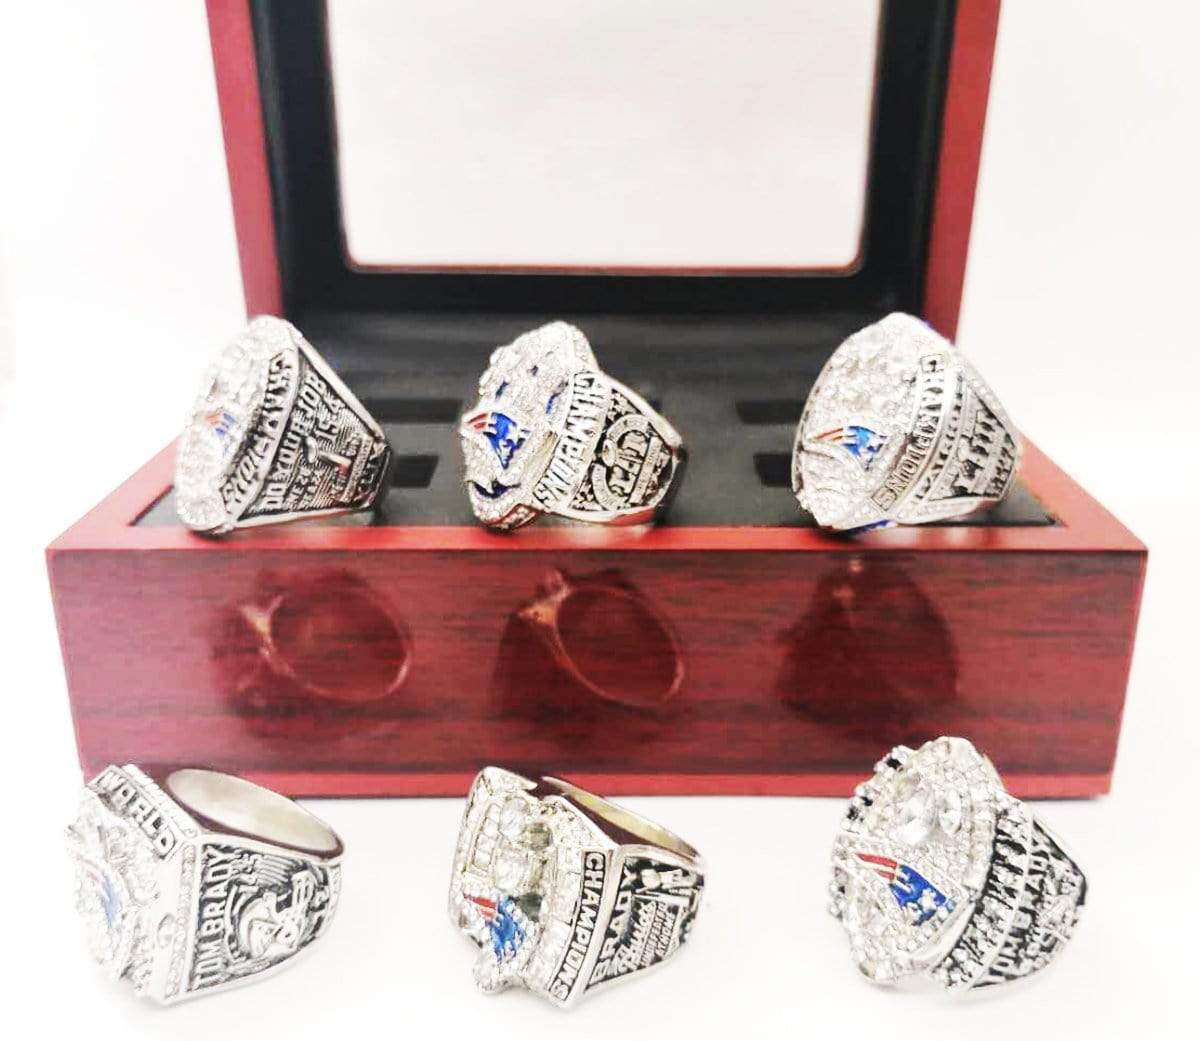 2016 New England Patriots Super Bowl LI Championship Ring Presented, Lot  #56867